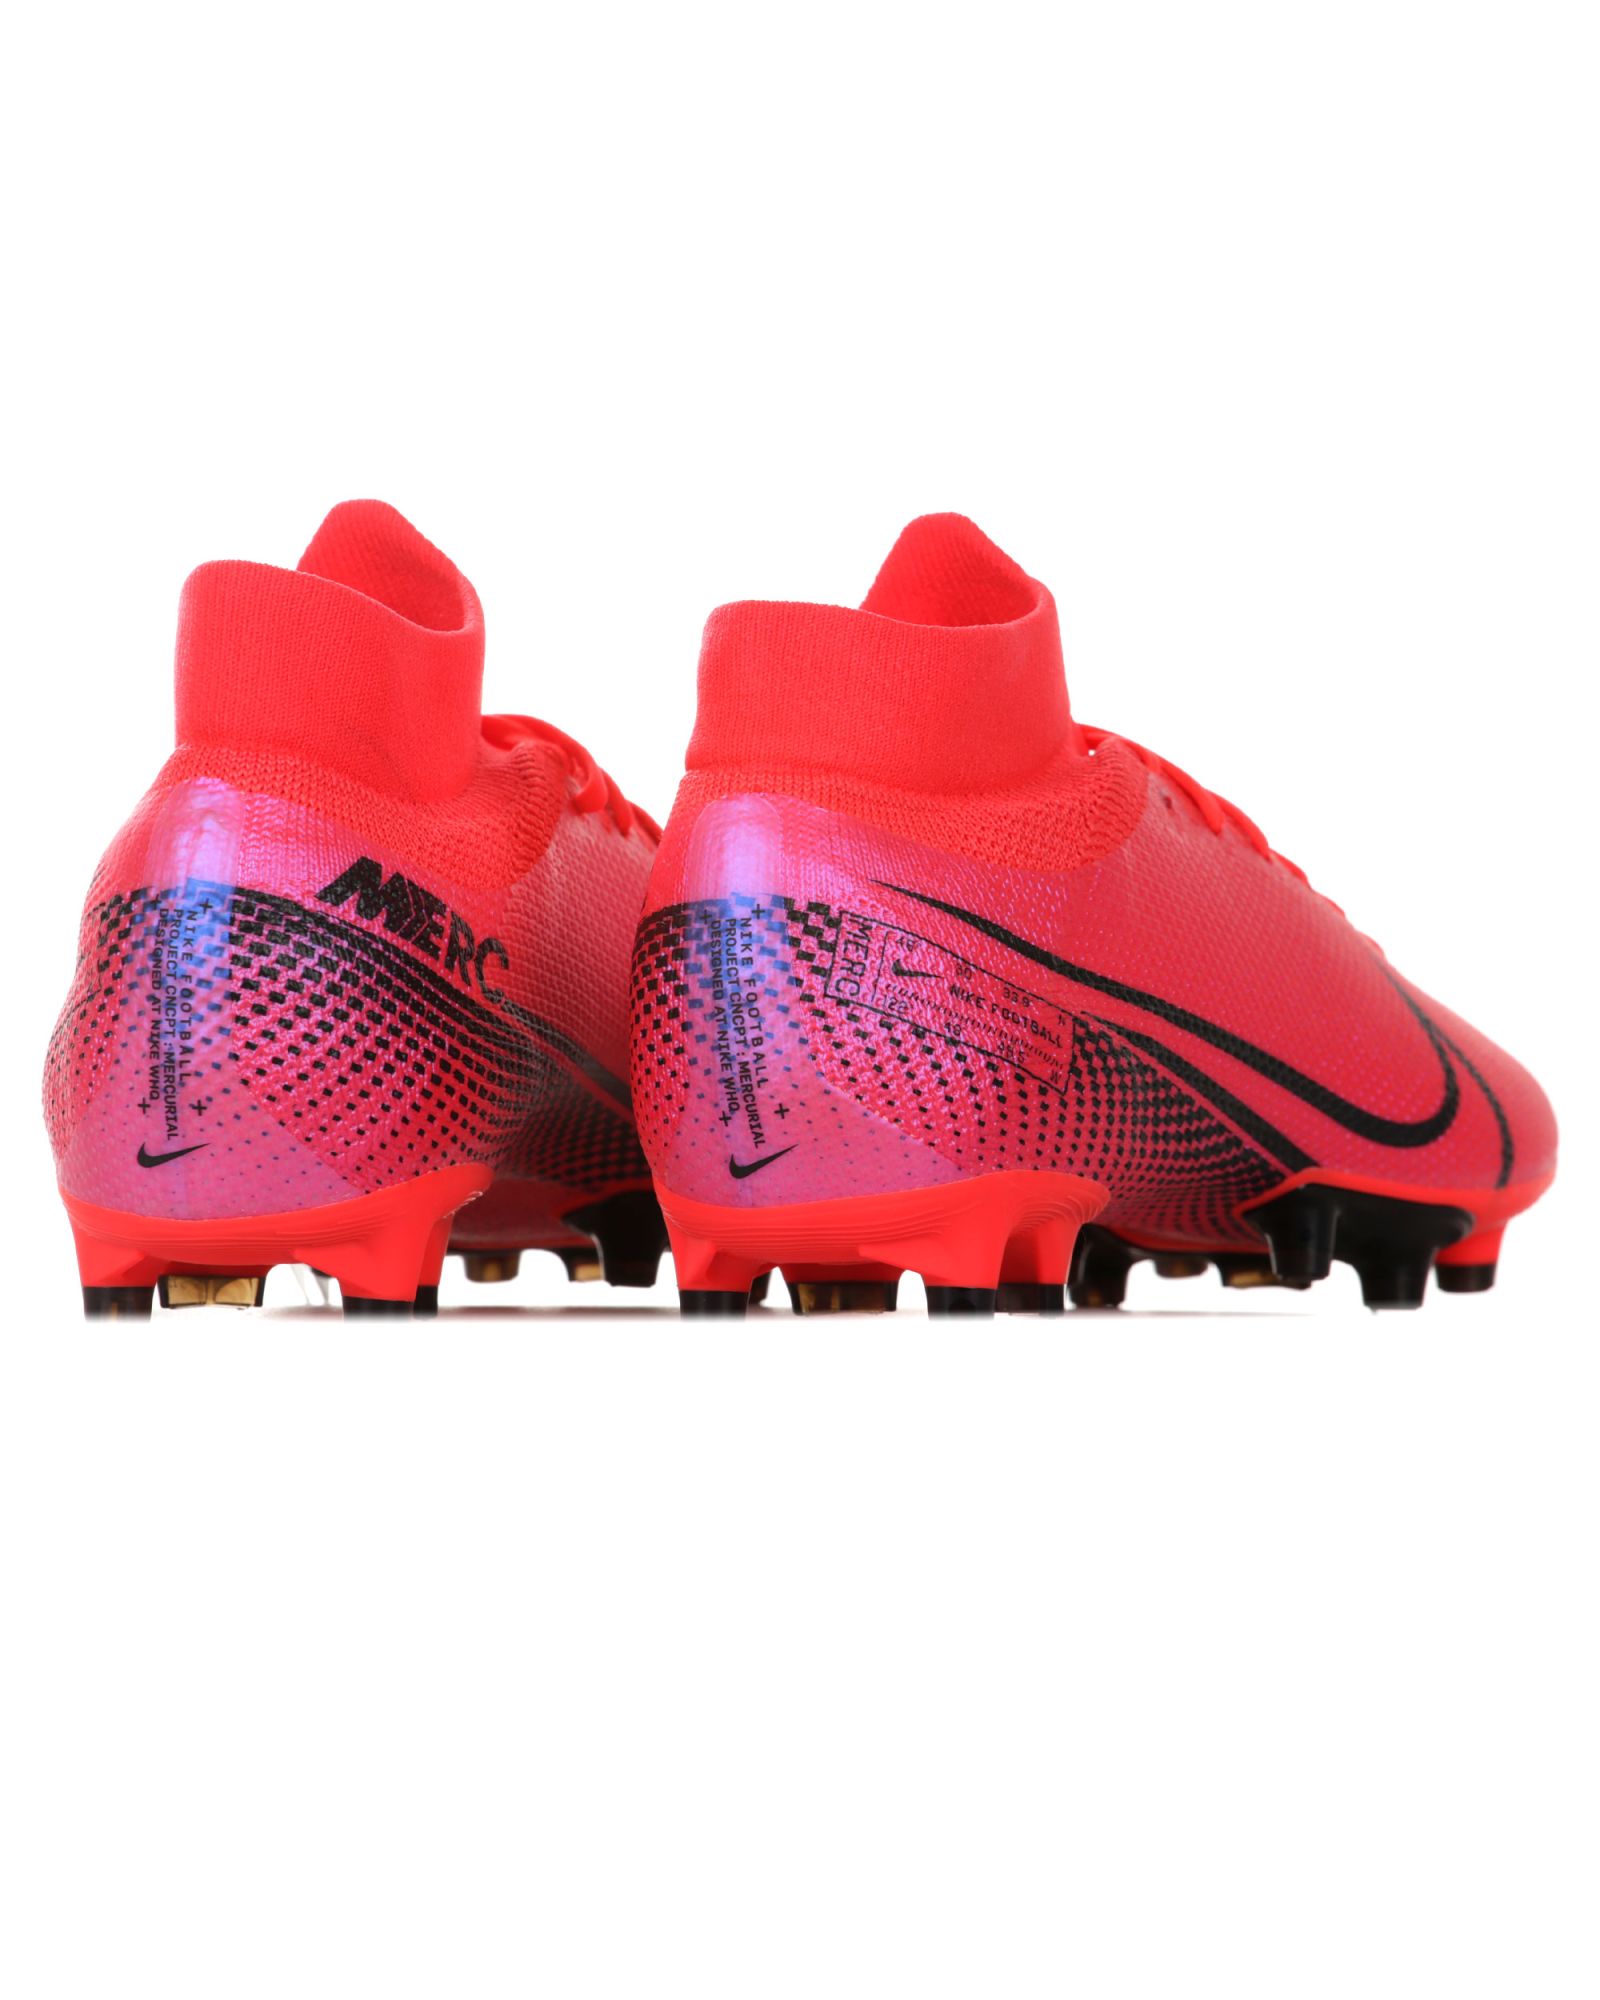 Botas de Fútbol Nike Mercurial Superfly 7 Pro AG-Pro Rosa - Fútbol Factory